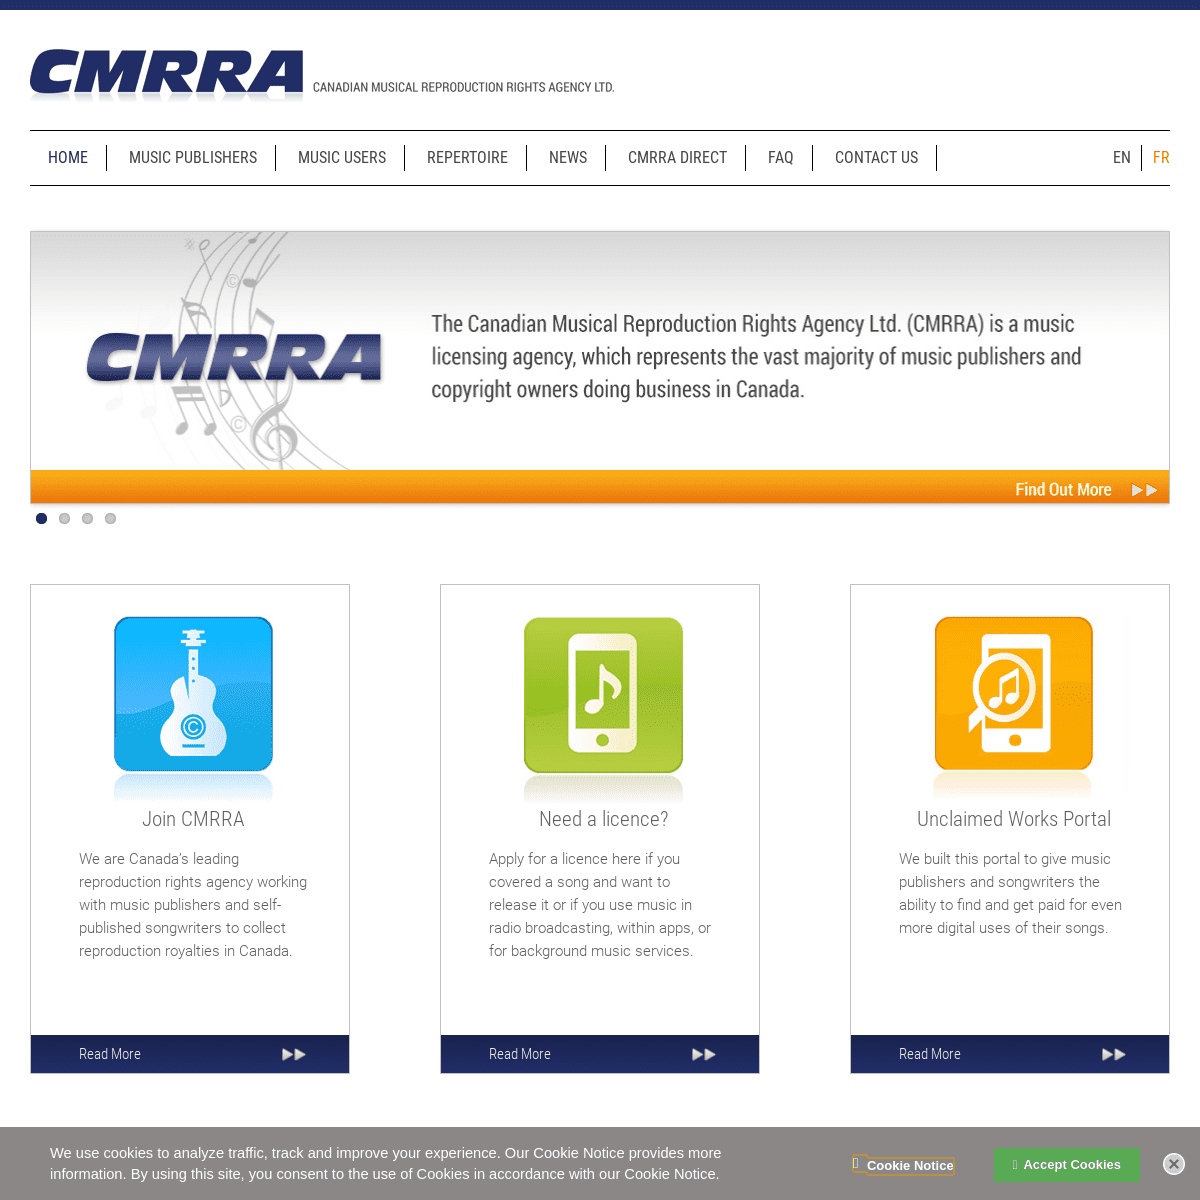 A complete backup of cmrra.ca